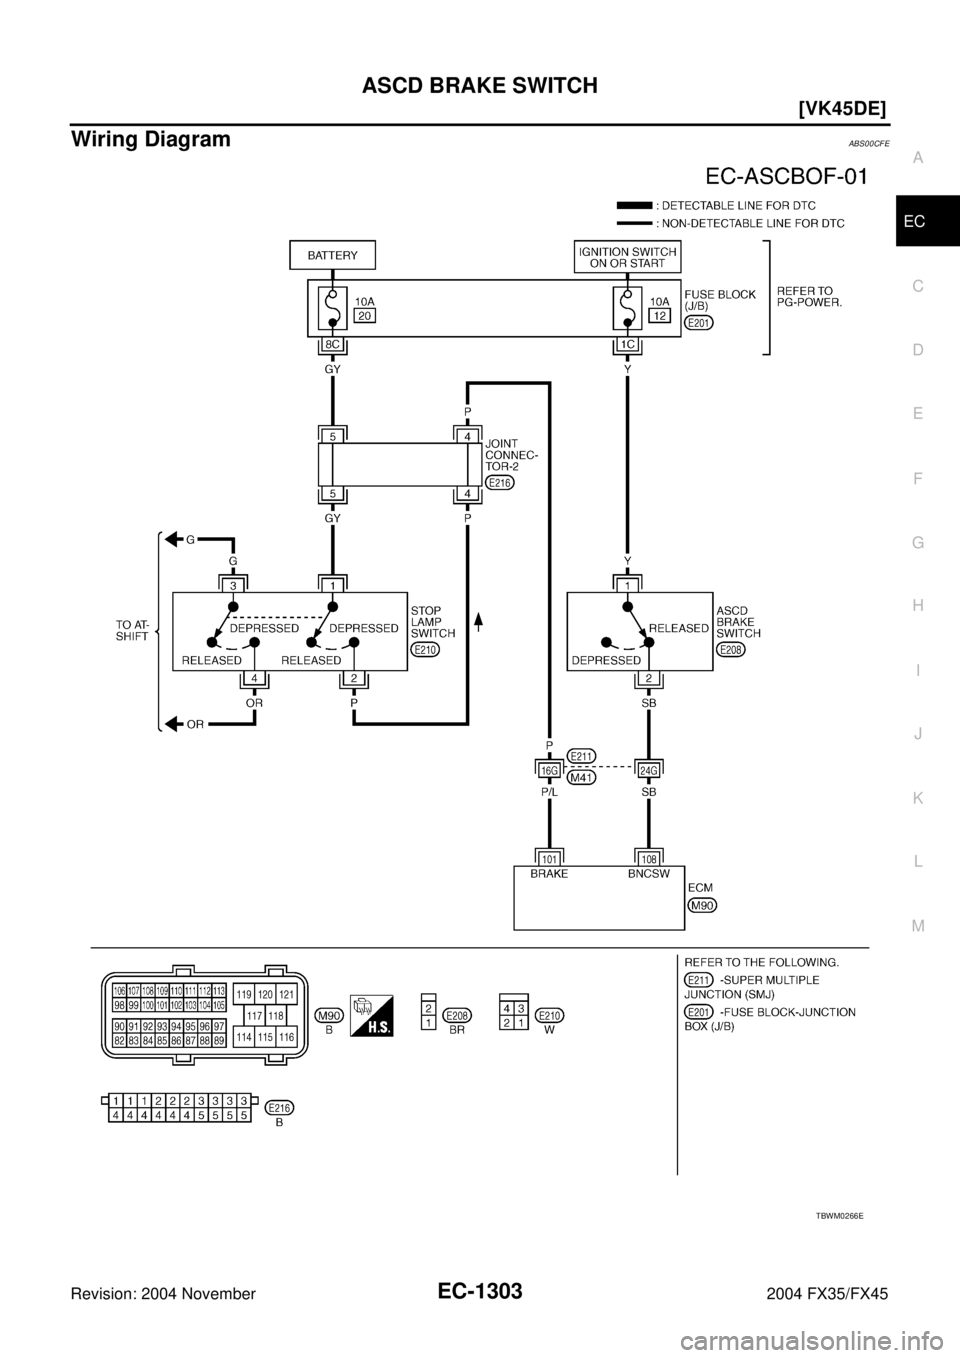 INFINITI FX35 2004  Service Manual ASCD BRAKE SWITCH
EC-1303
[VK45DE]
C
D
E
F
G
H
I
J
K
L
MA
EC
Revision: 2004 November 2004 FX35/FX45
Wiring DiagramABS00CFE
TBWM0266E 